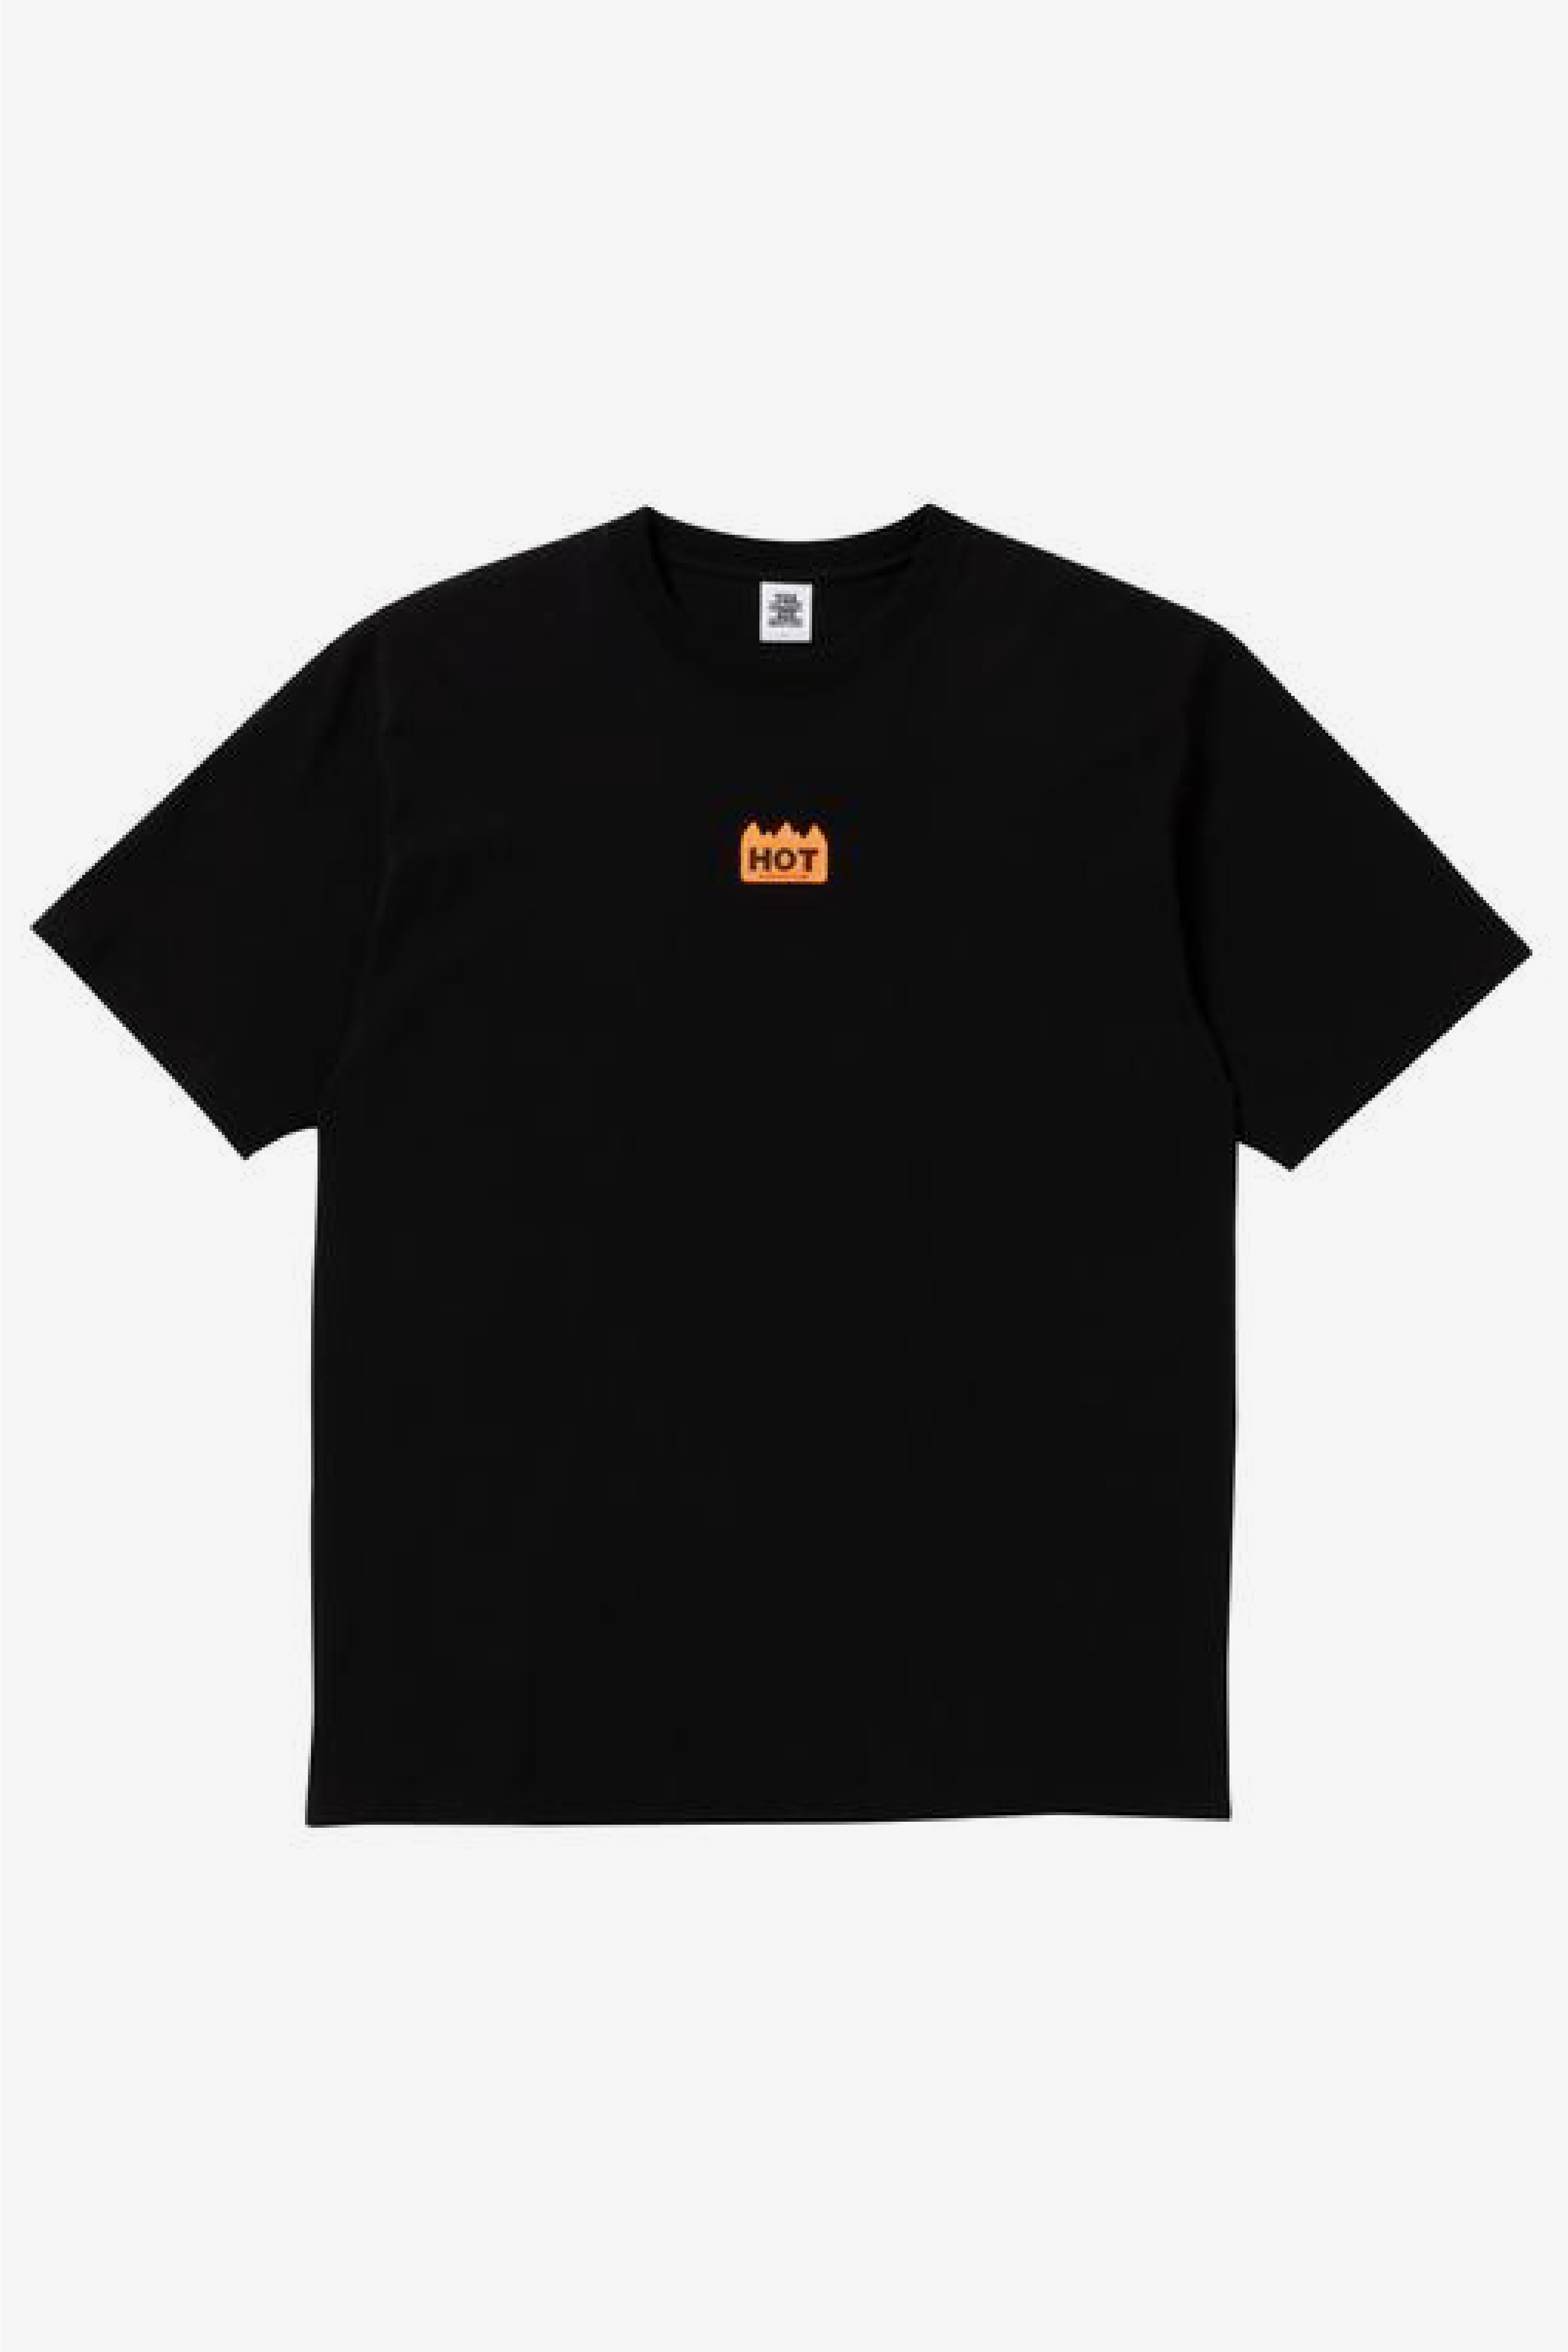 Selectshop FRAME - BLACKEYEPATCH Hot Label Tee T-Shirt Dubai